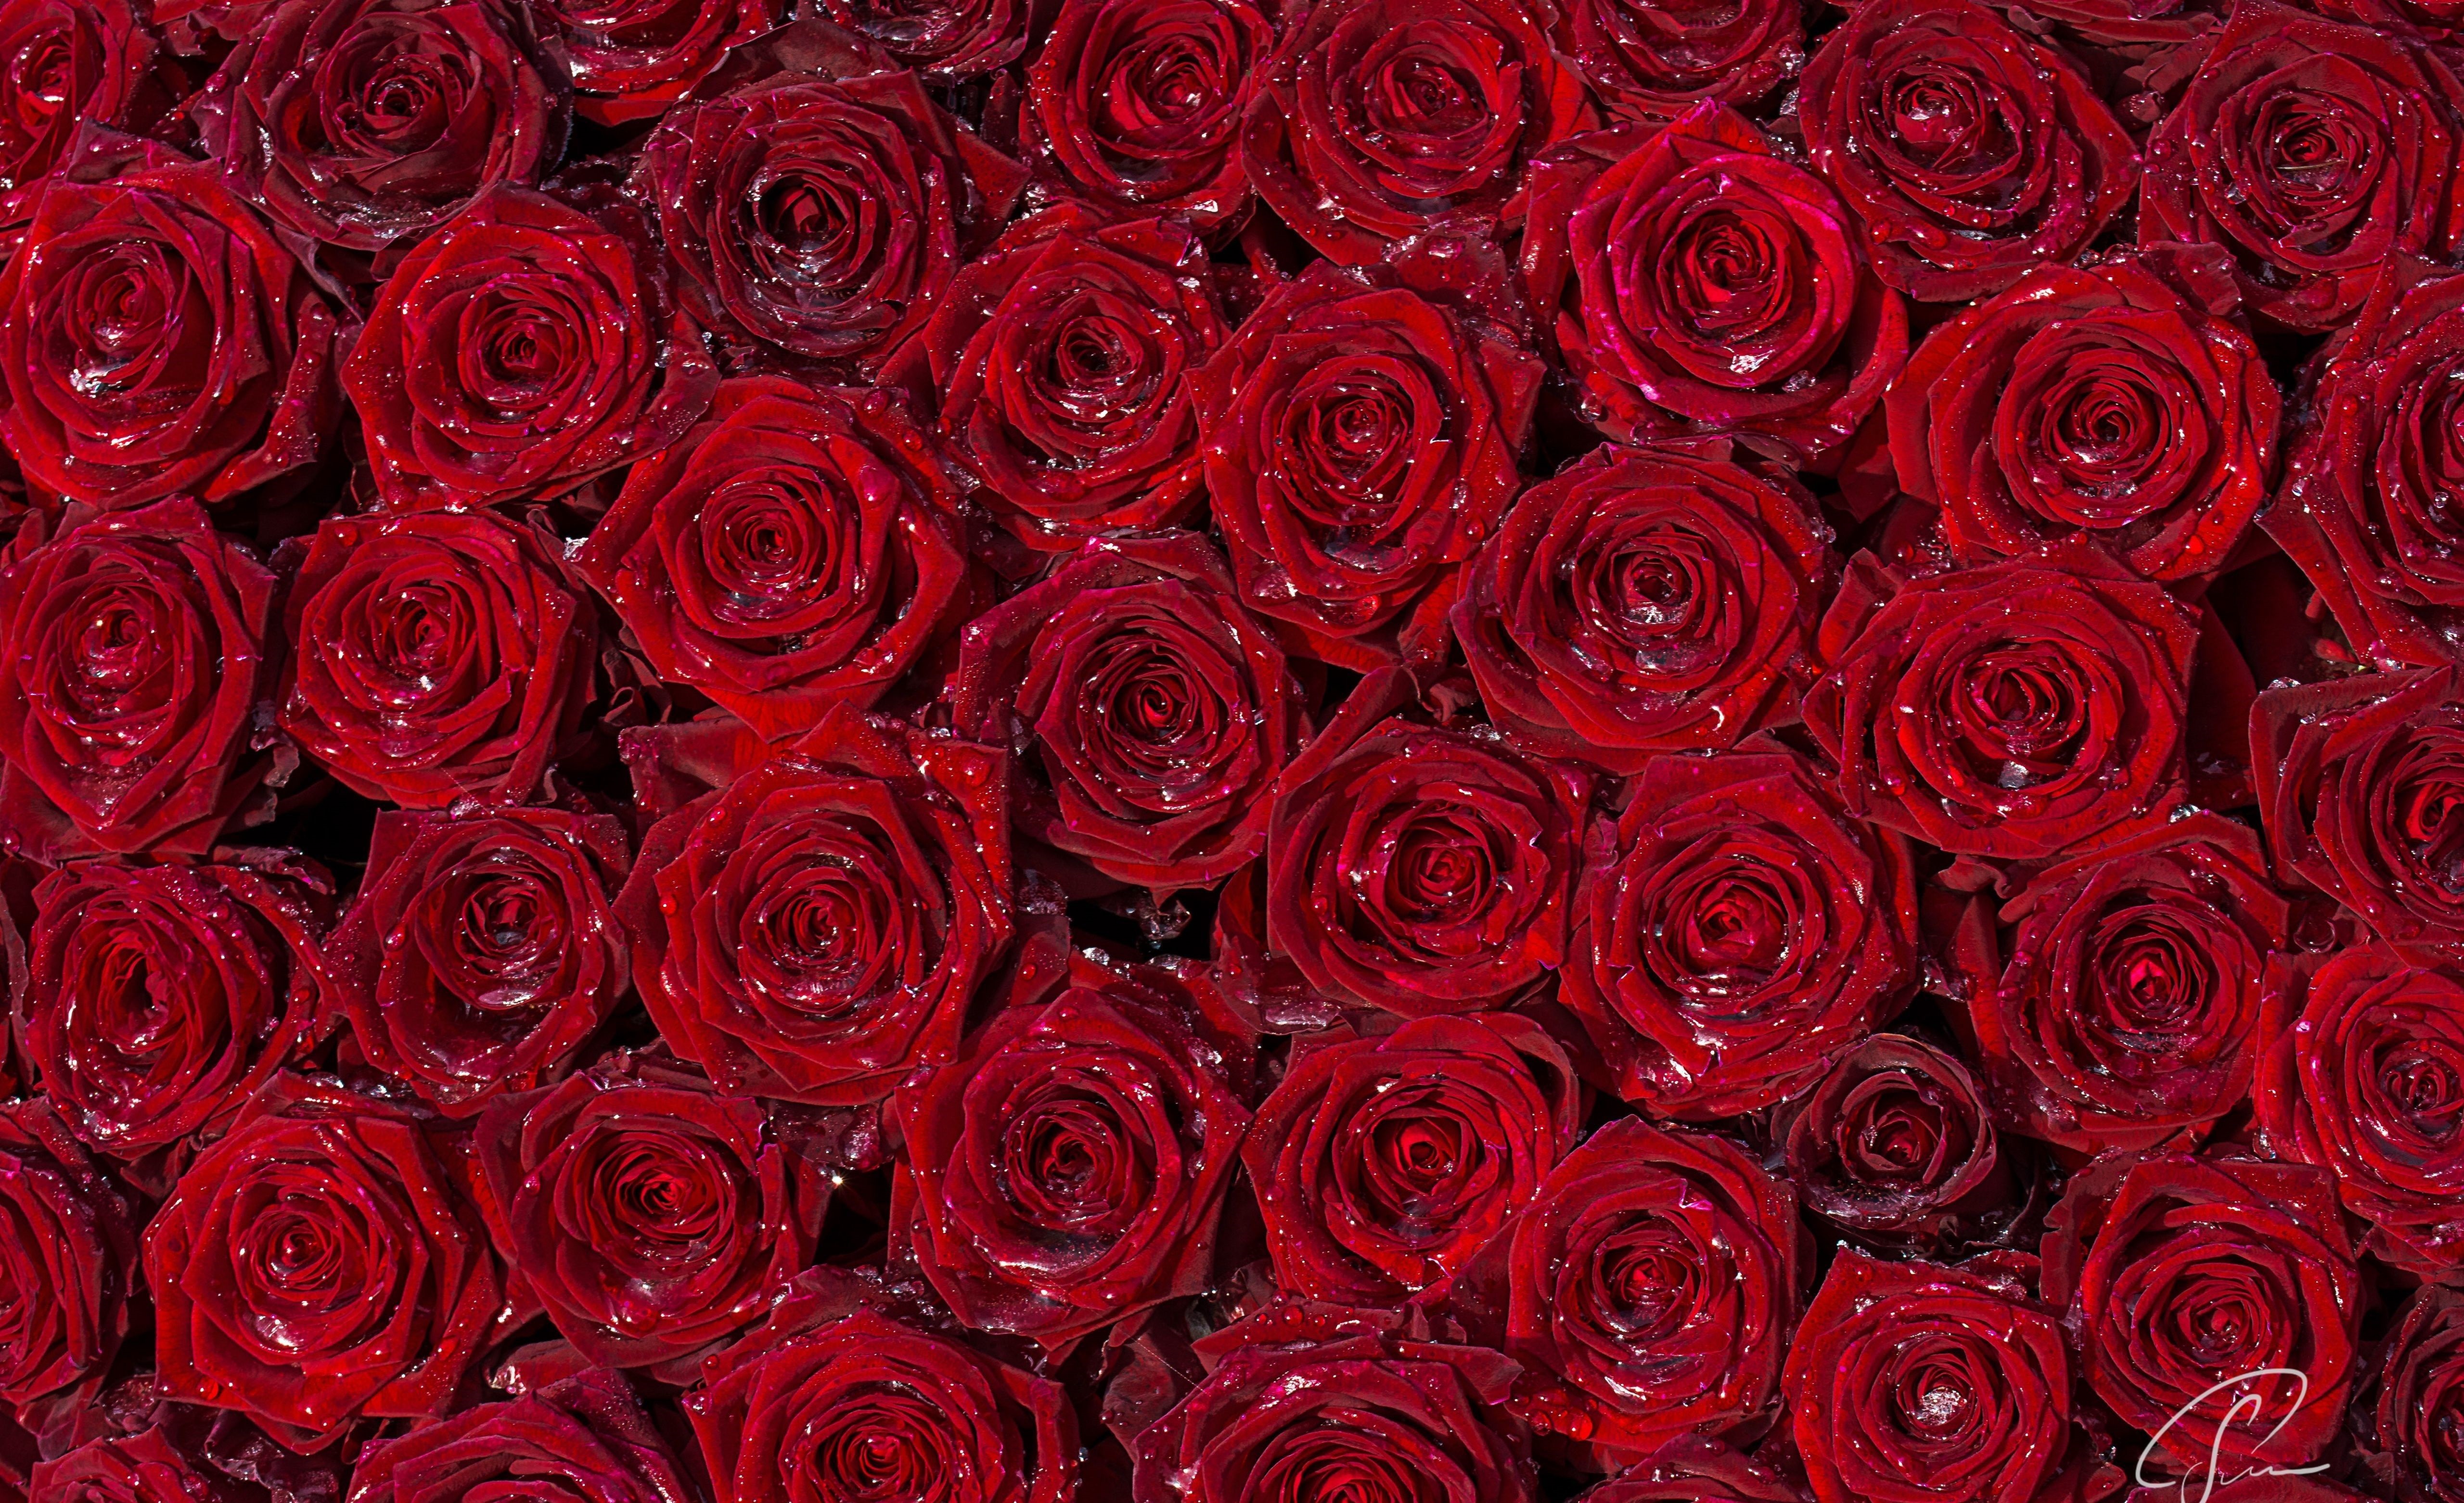 Rose HD Wallpapers Free download 